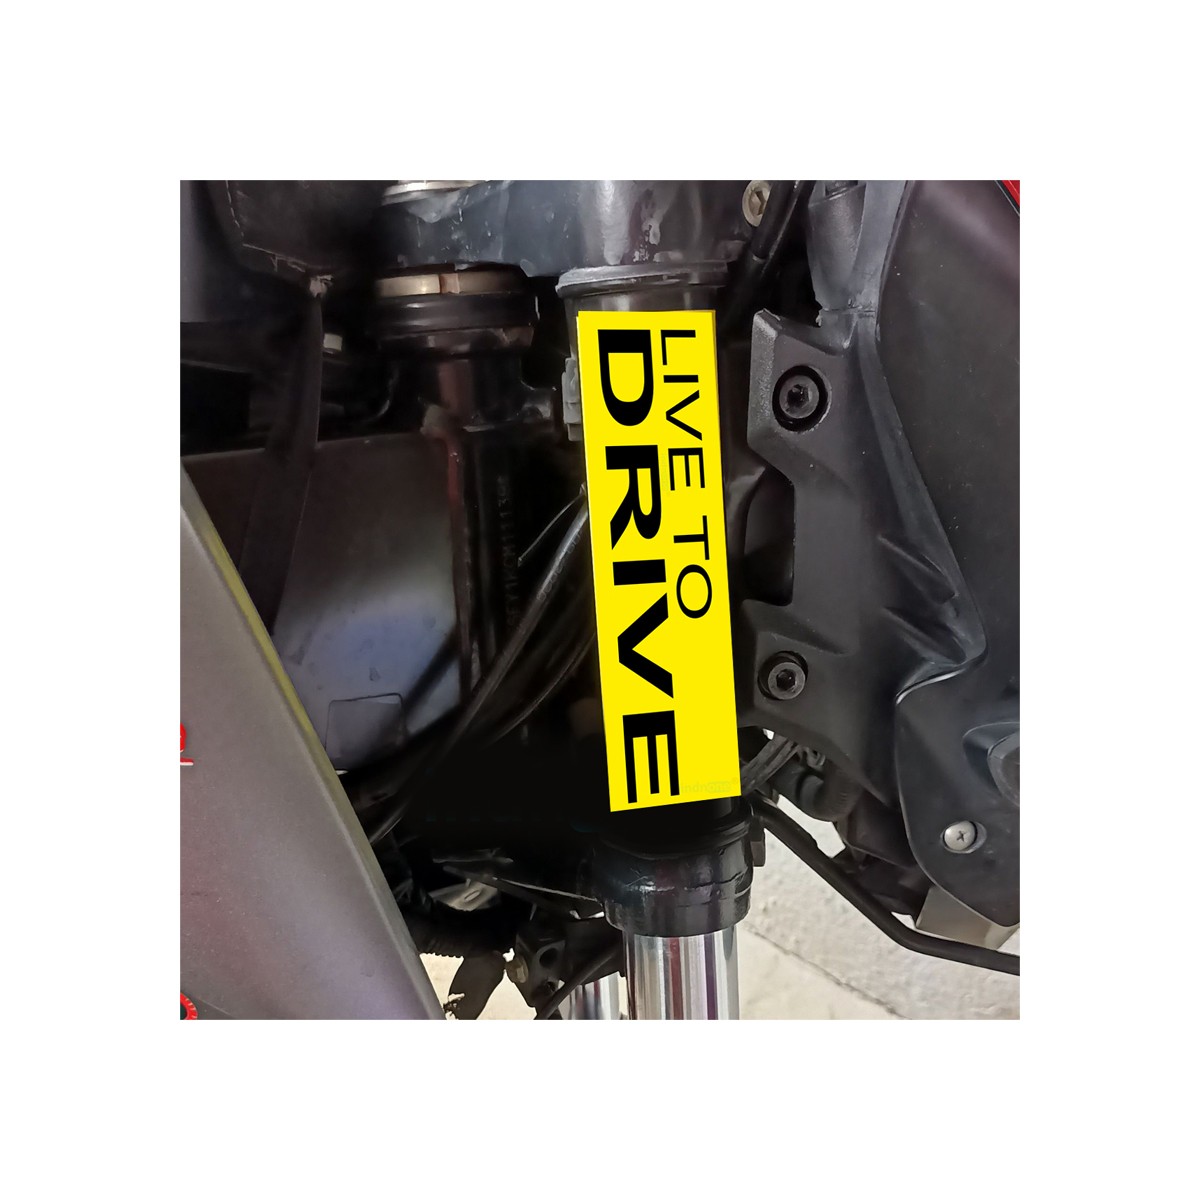 indnone® Live to Drive Logo Sticker for Bike | Sticker Stylish Vinyl Decal Sticker | Standard Size Windows Side Hood Bumper